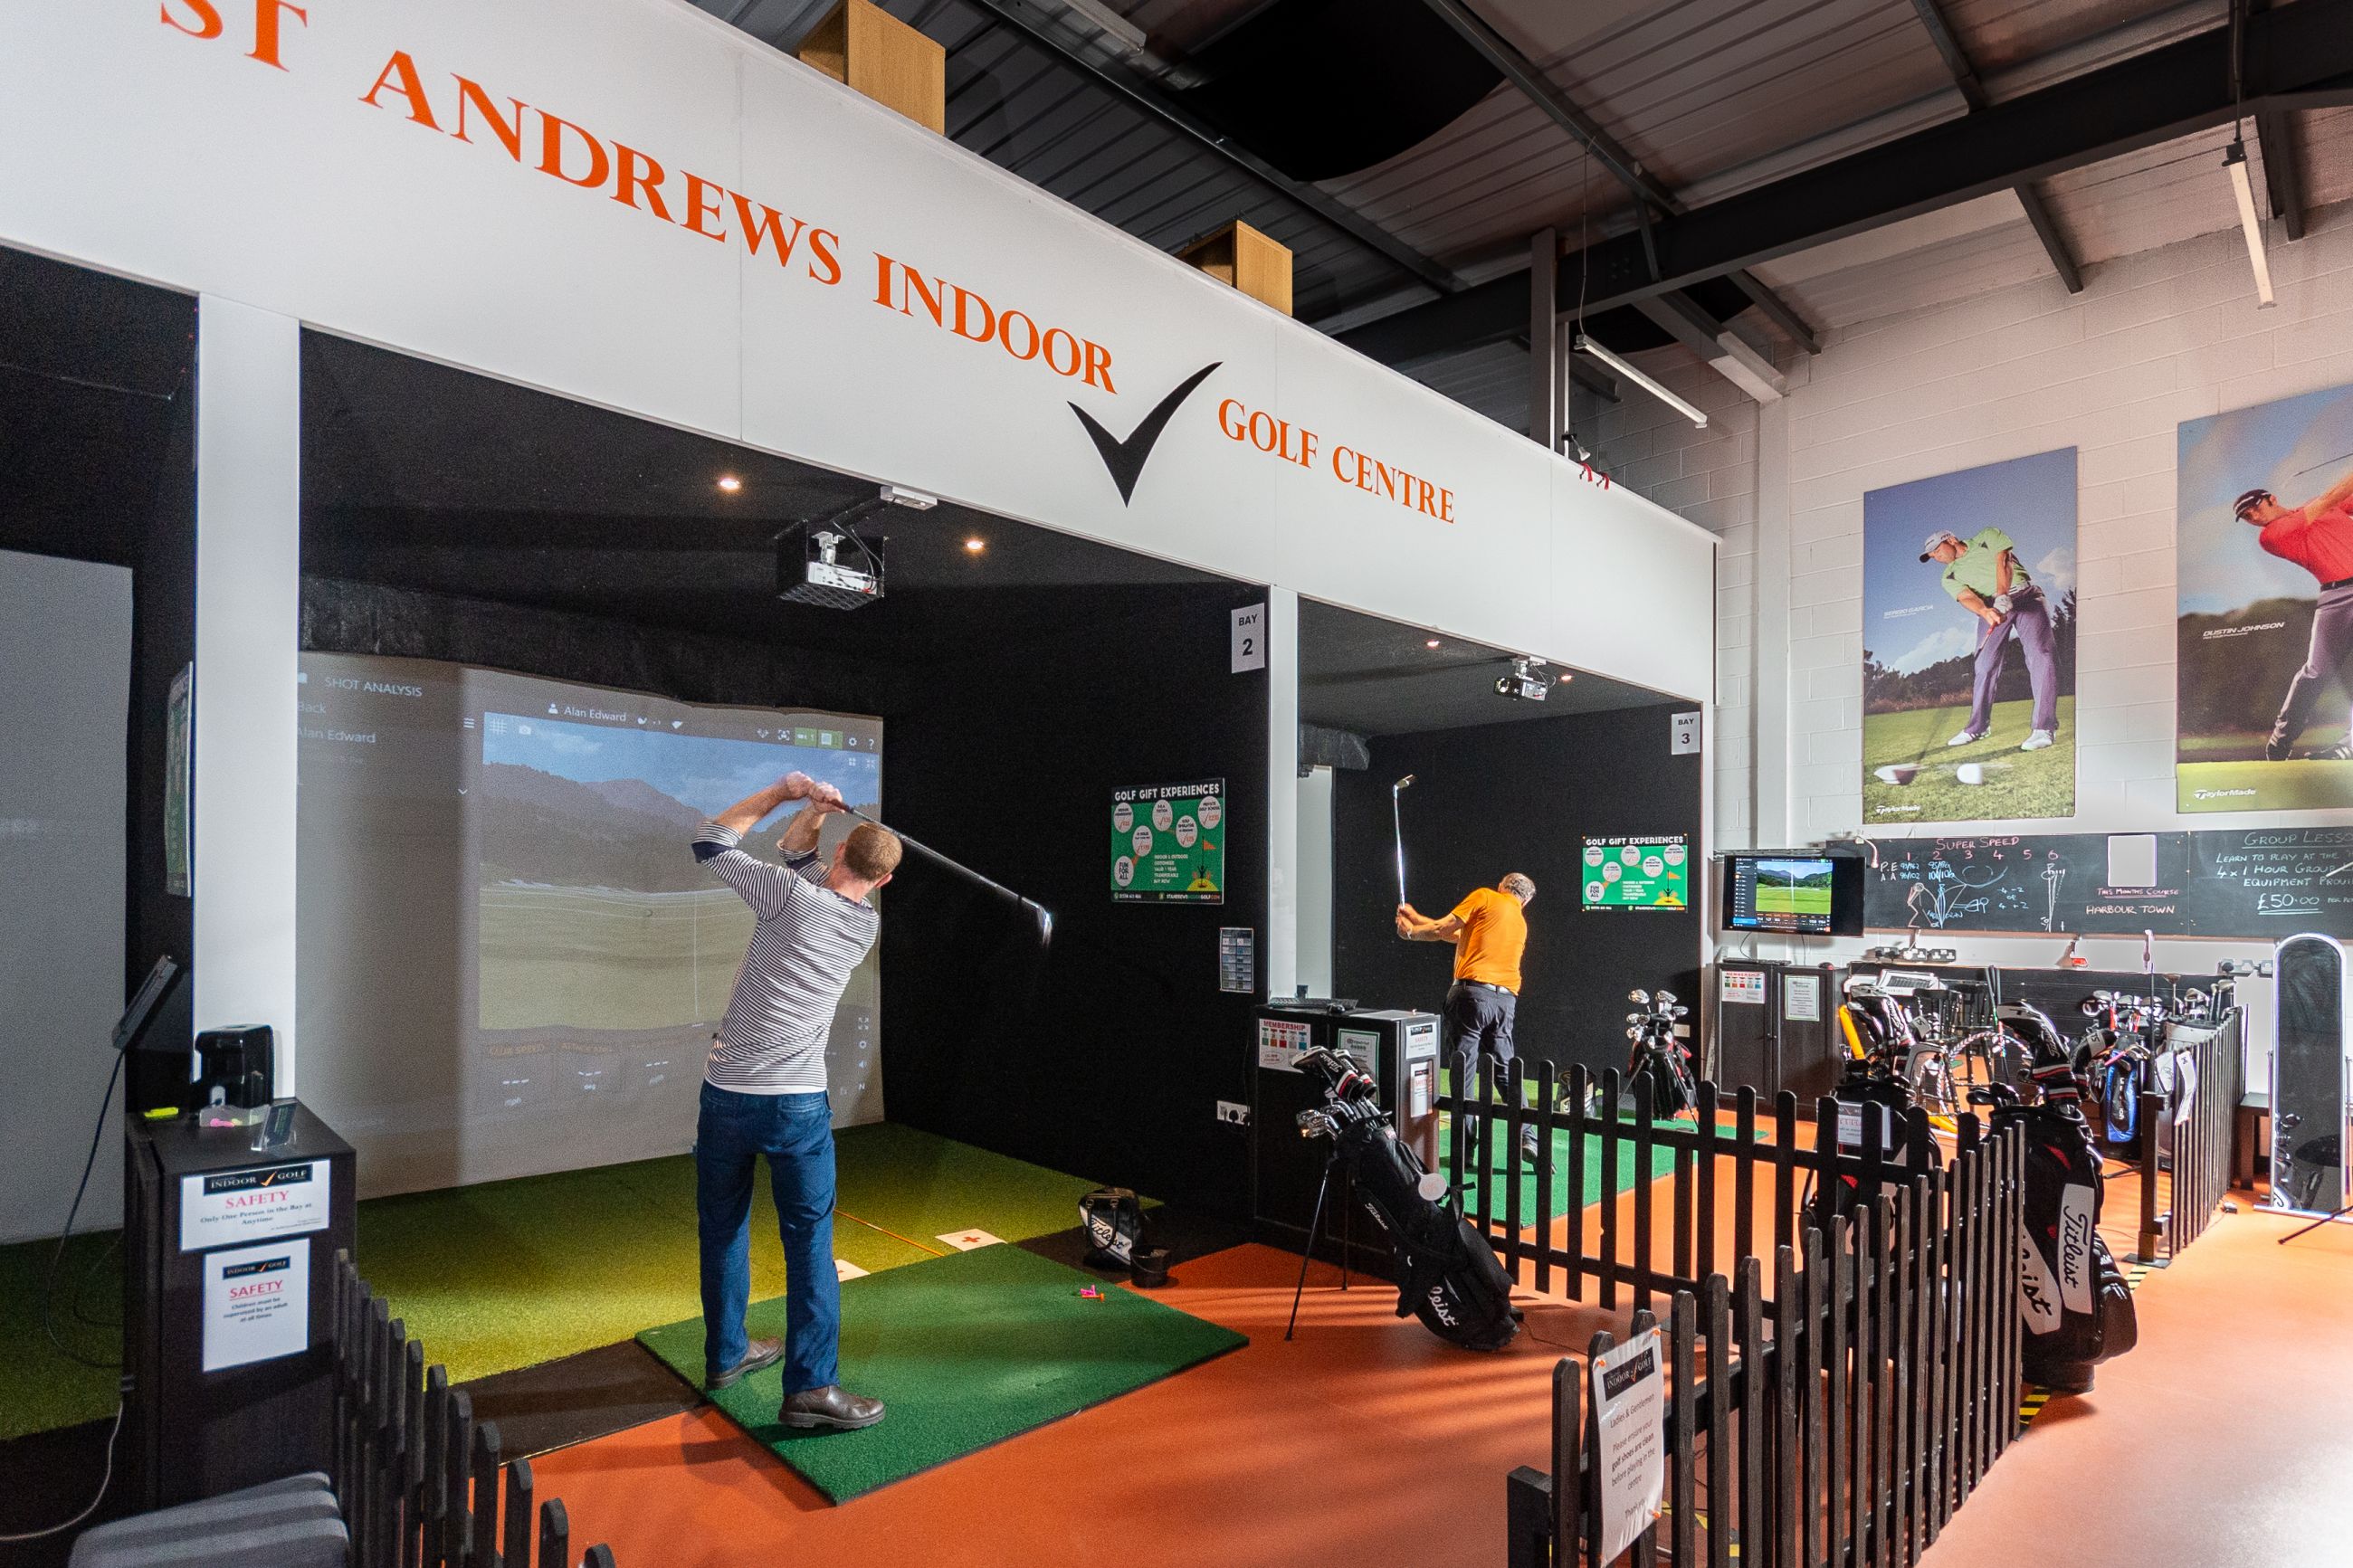 St Andrews Indoor Golf Centre Gallery Image 1